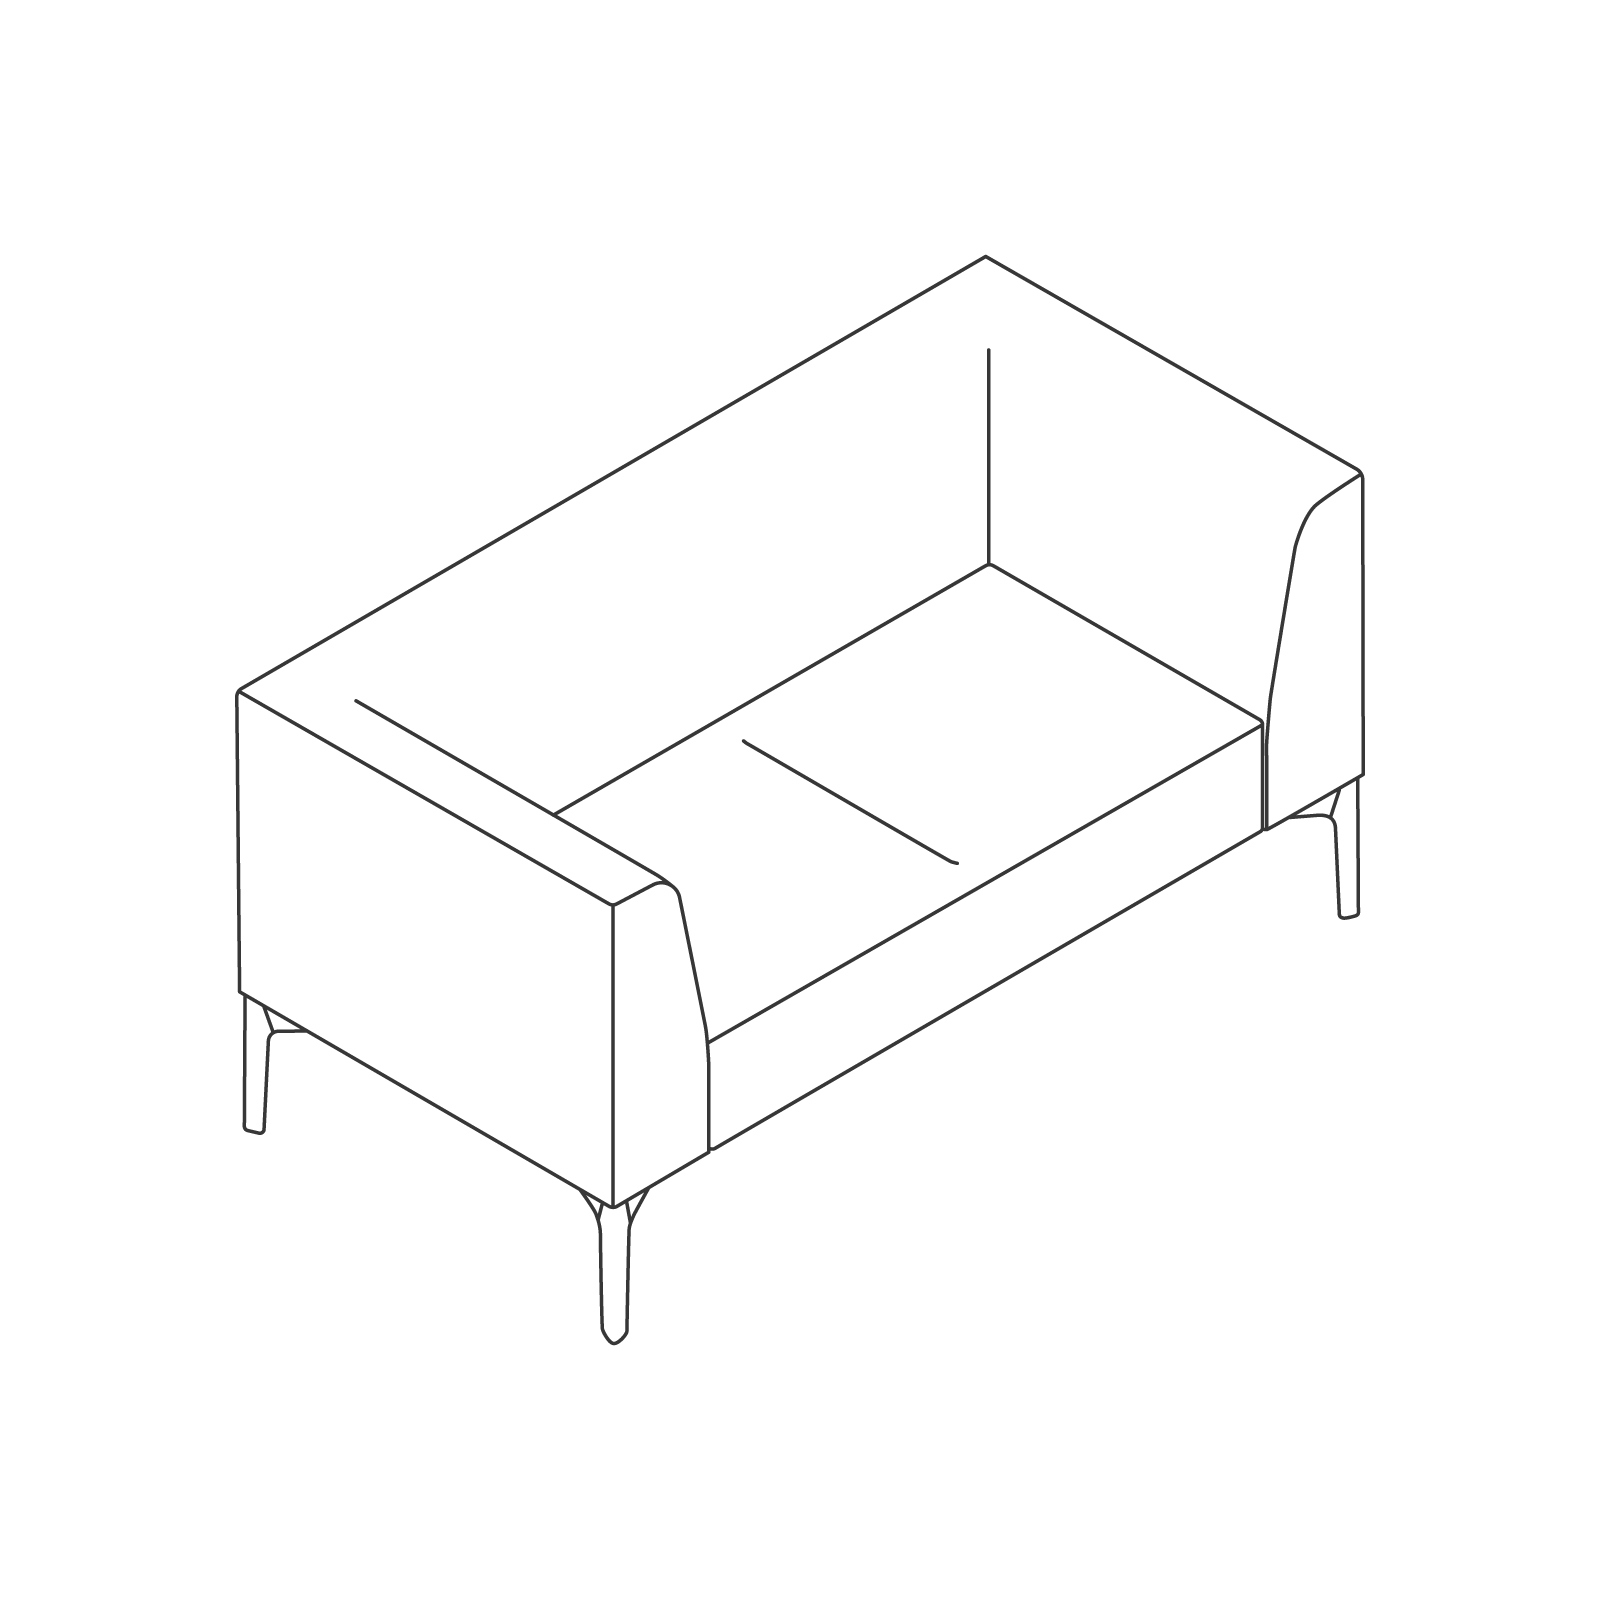 Un dibujo - Sofá Symbol – 2 asientos